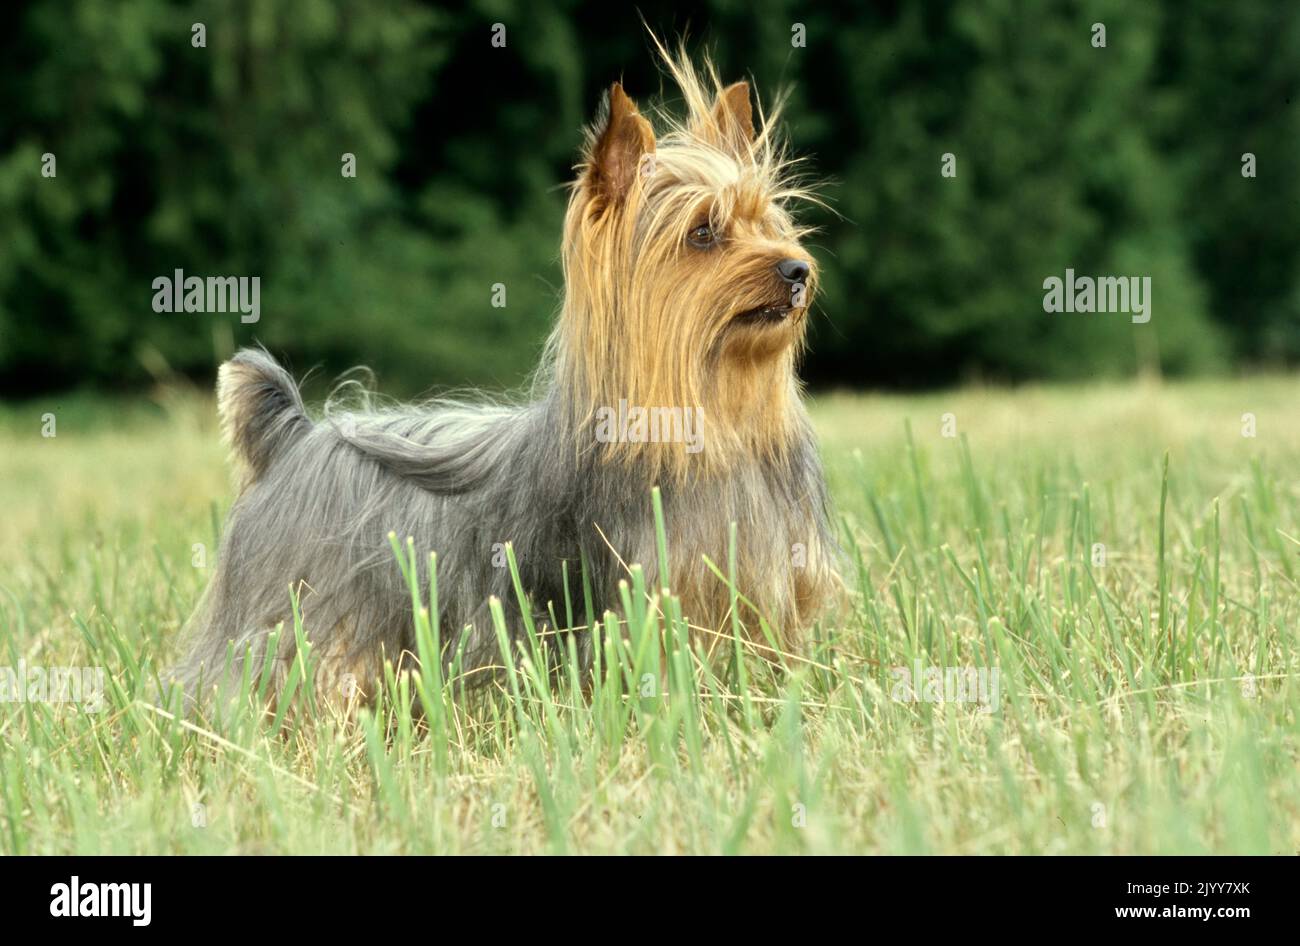 Silky Terrier standing in grassy field Stock Photo